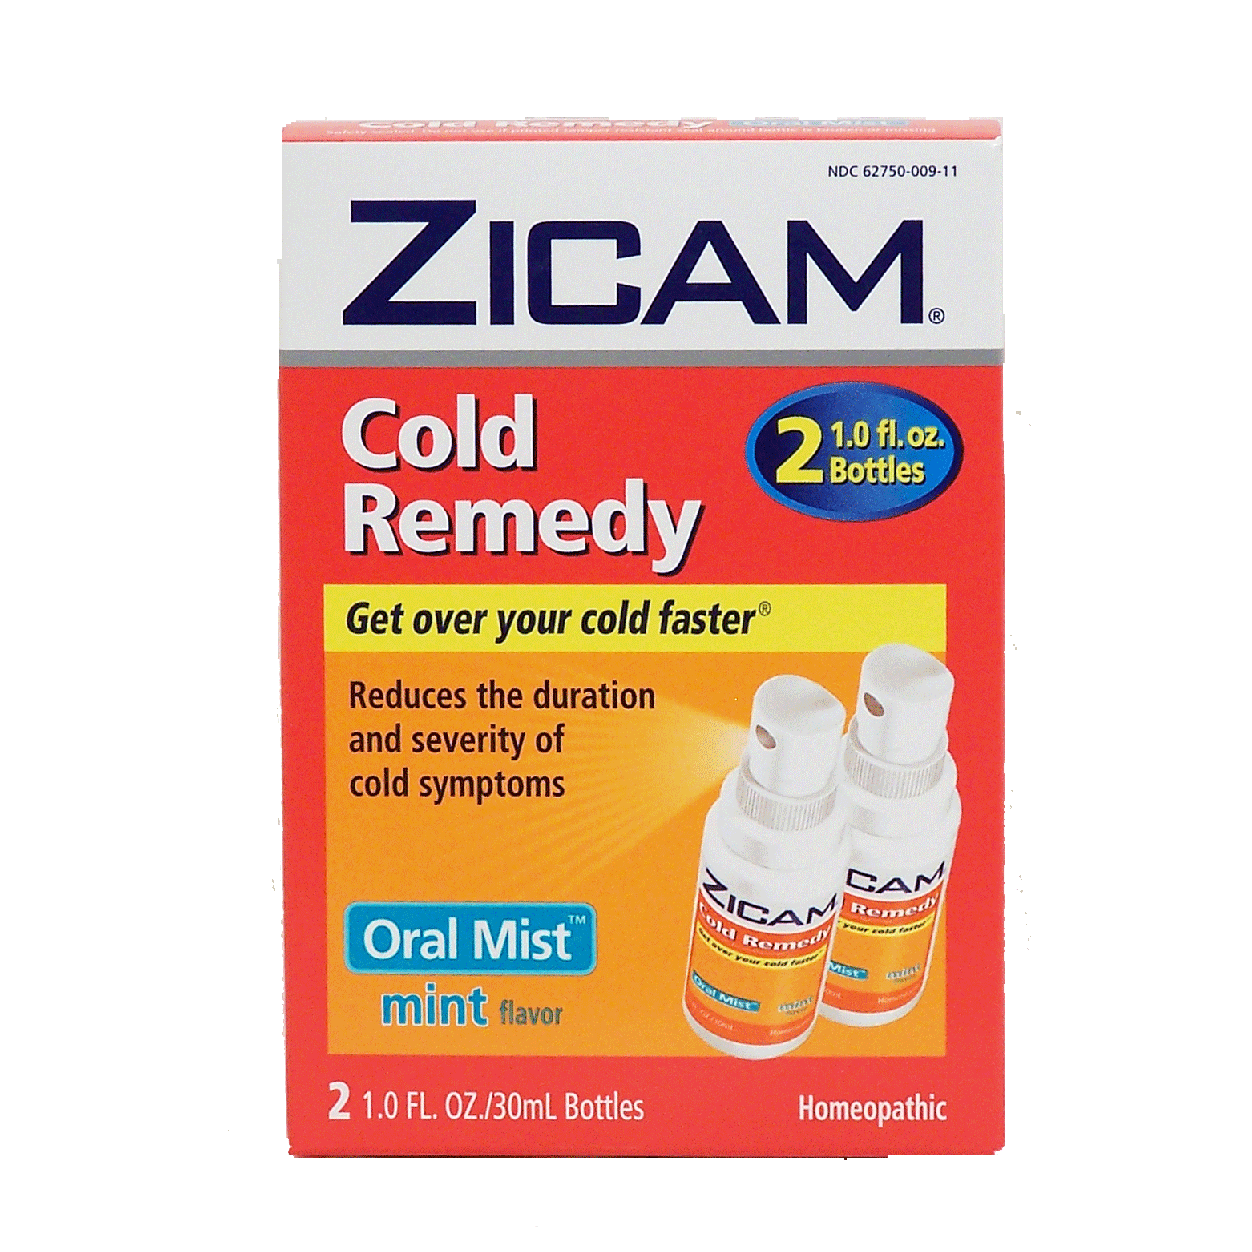 Zicam Cold Remedy Oral Mist Mint Flavor Reduces The Duration2fl Oz 